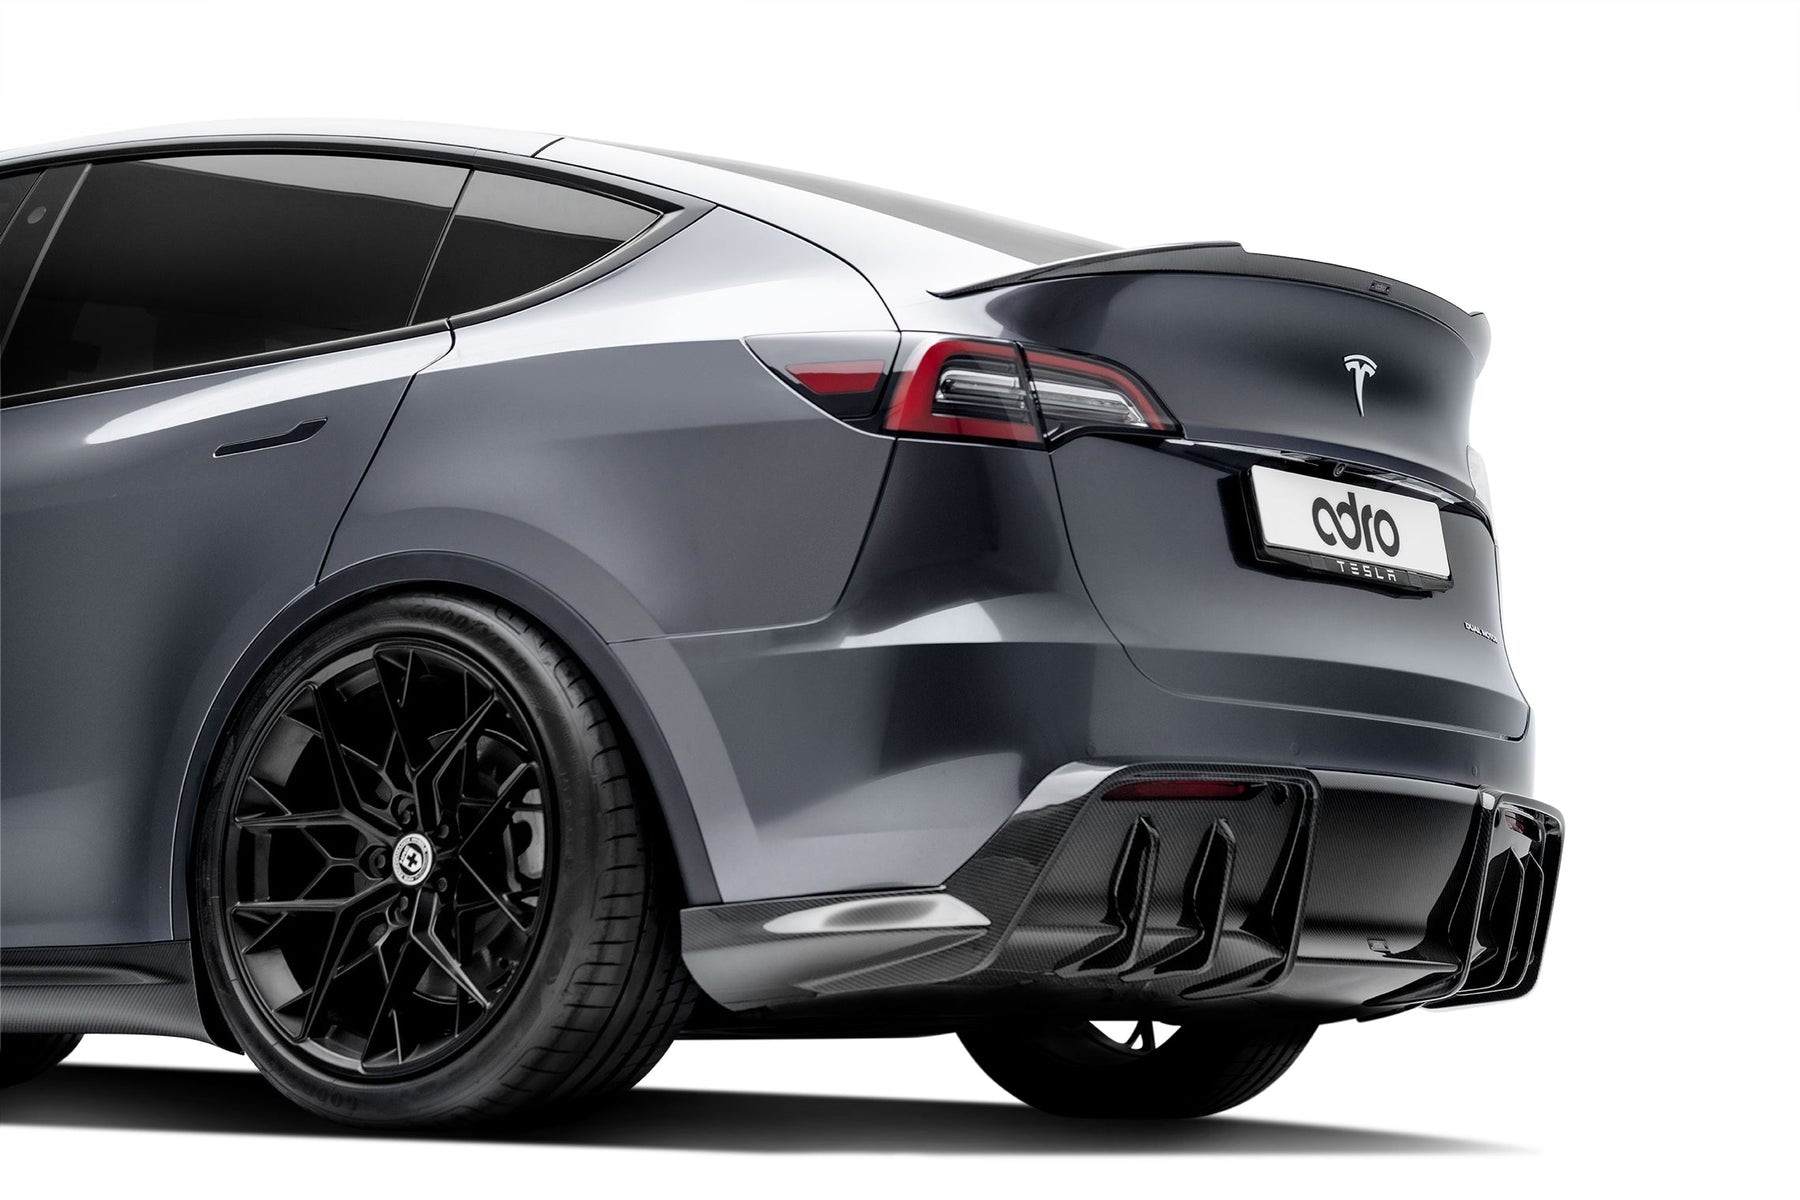 Adro Tesla Model Y Premium Prepeg Carbon Fiber Spoiler